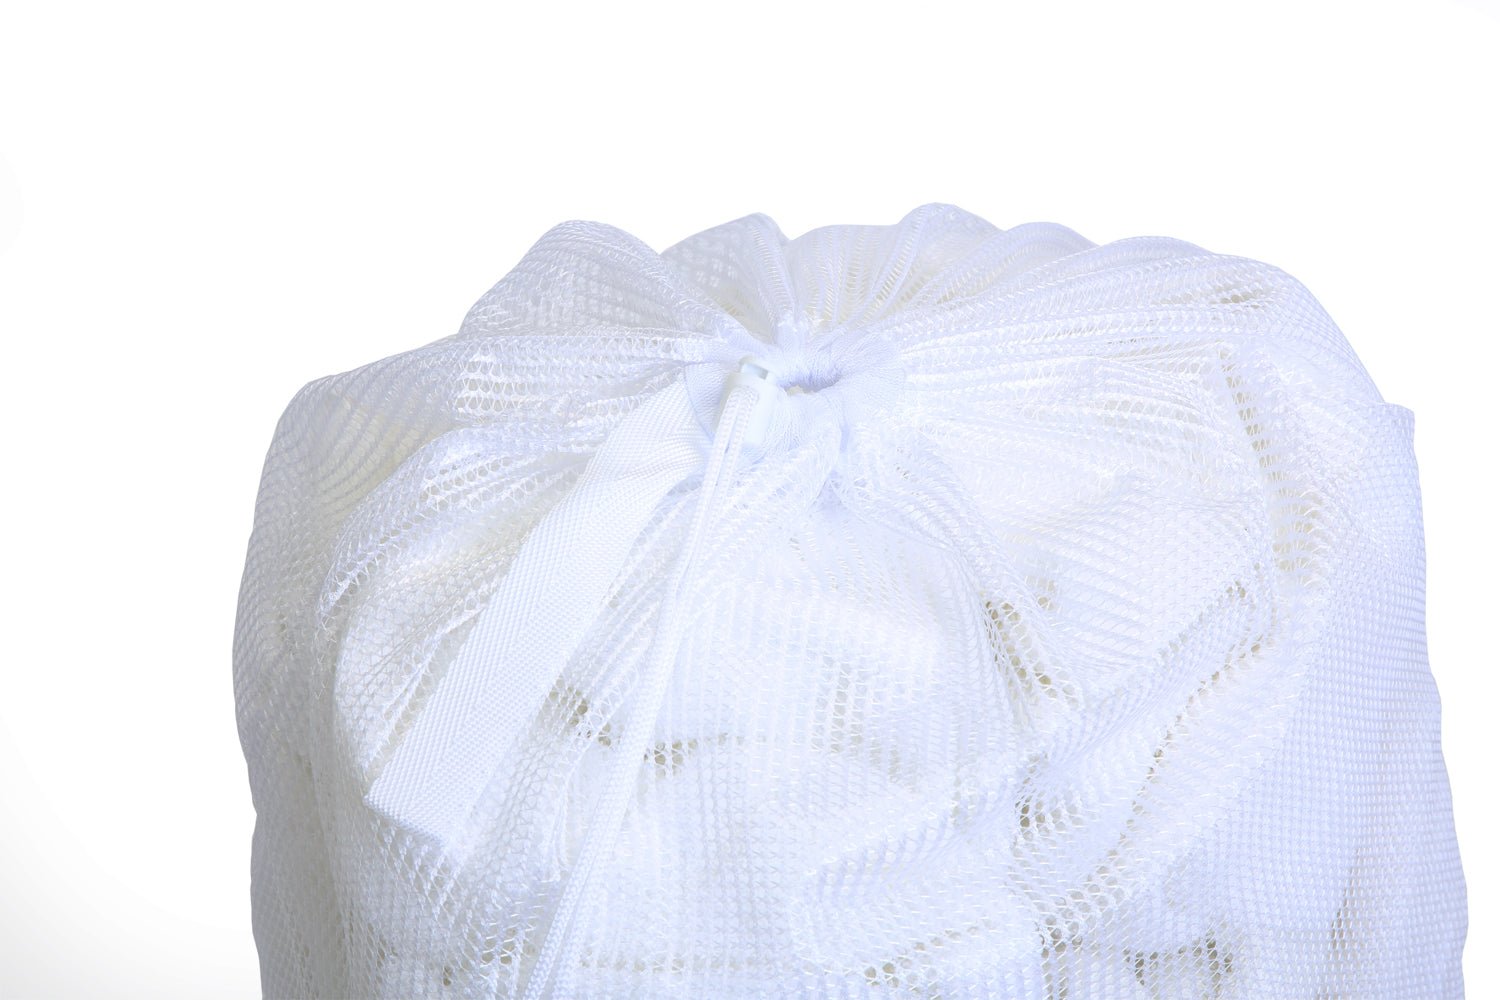 Mesh Laundry Bag with Handle and Push Lock Drawstring - Bright White - Smart Design® 3